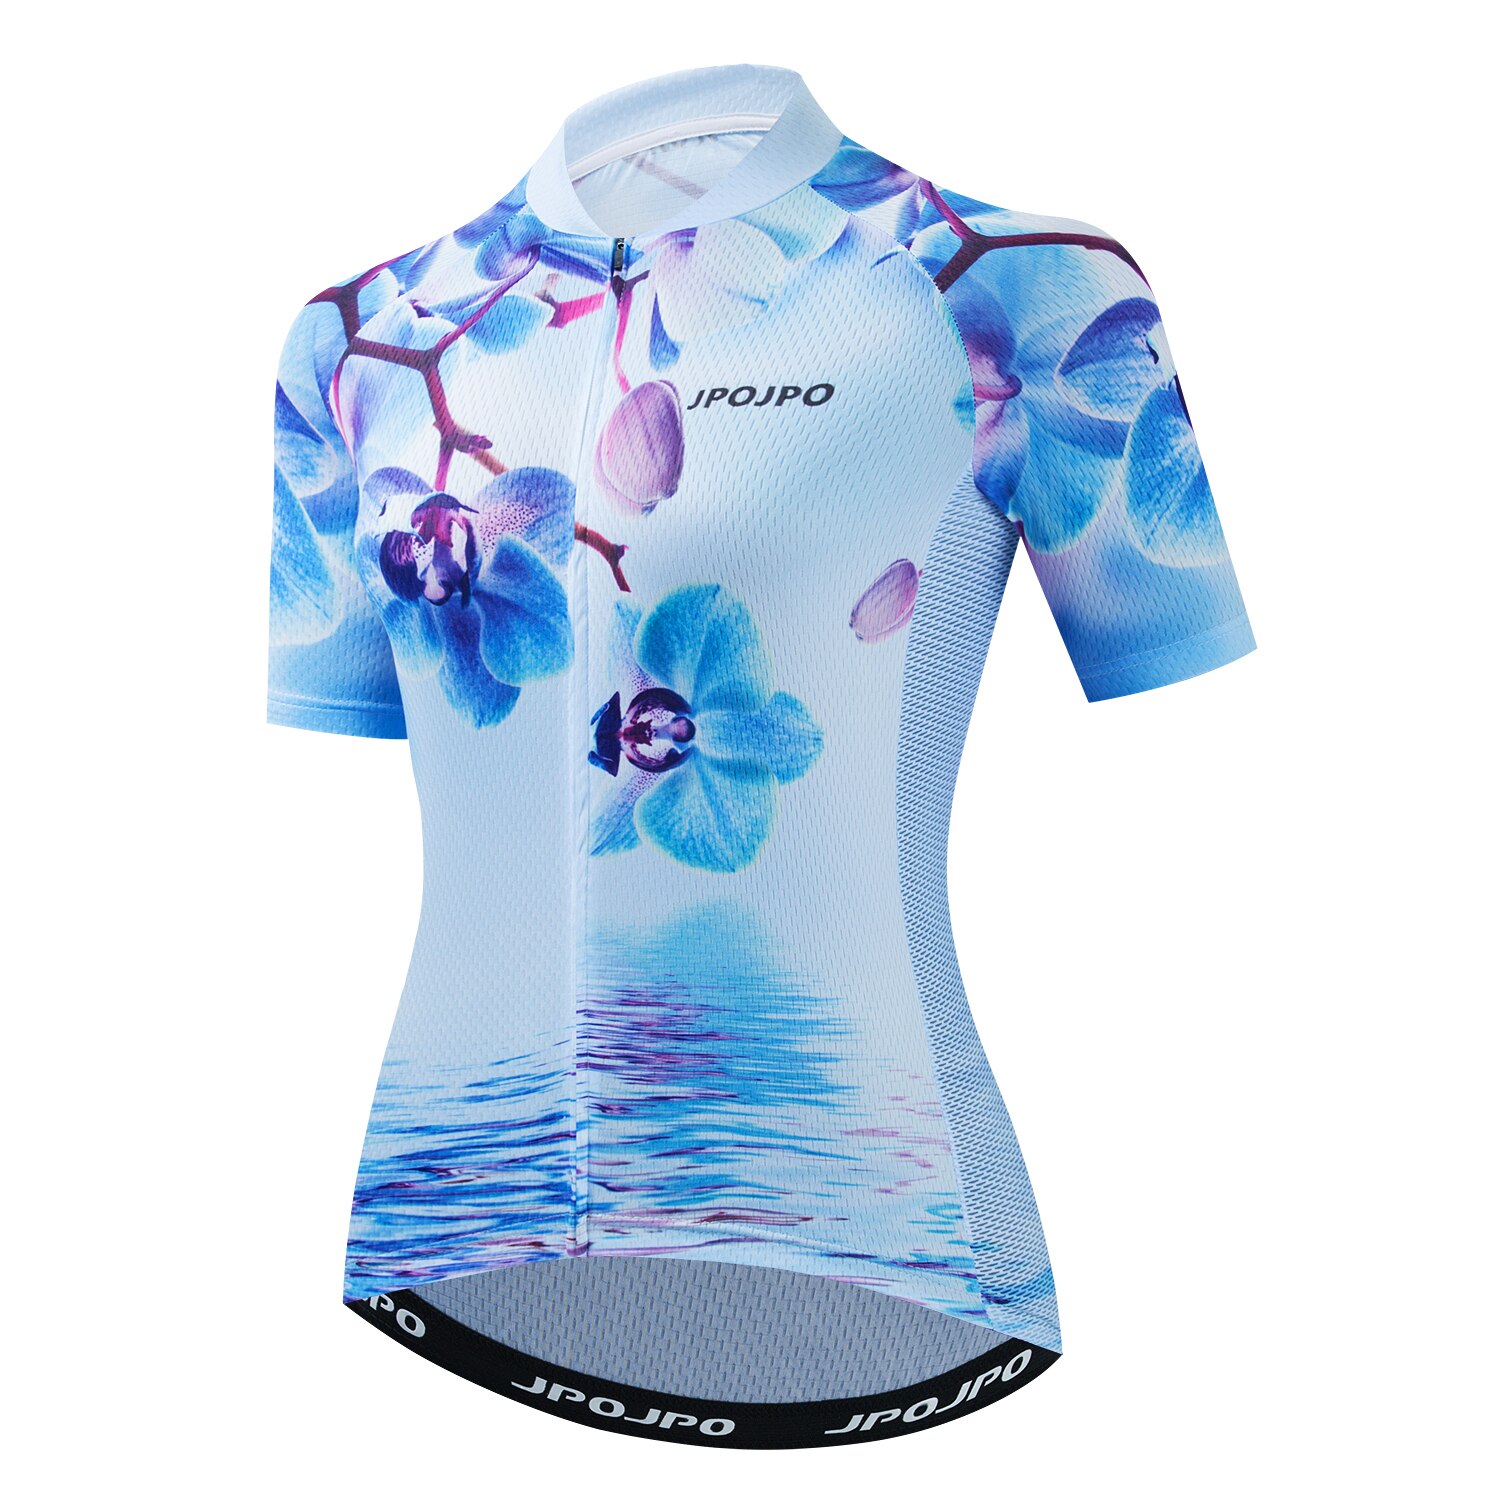 JPOJPO Womens Cycling Jersey Short Sleeve Reflective and Bike Shorts Set 